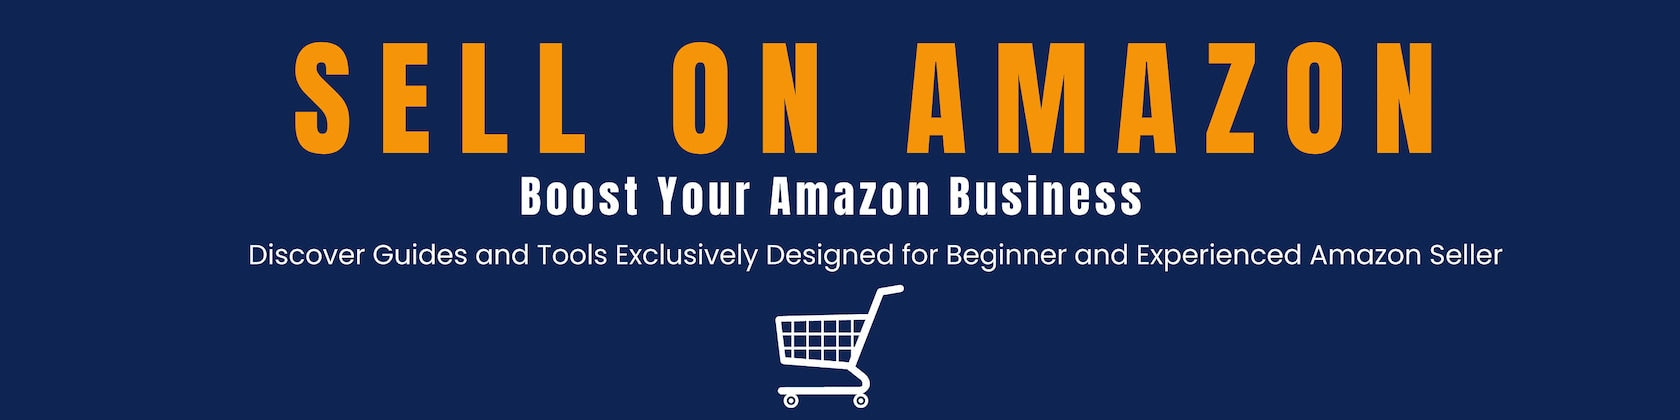 Amazon Success Hub: Tools & Guides